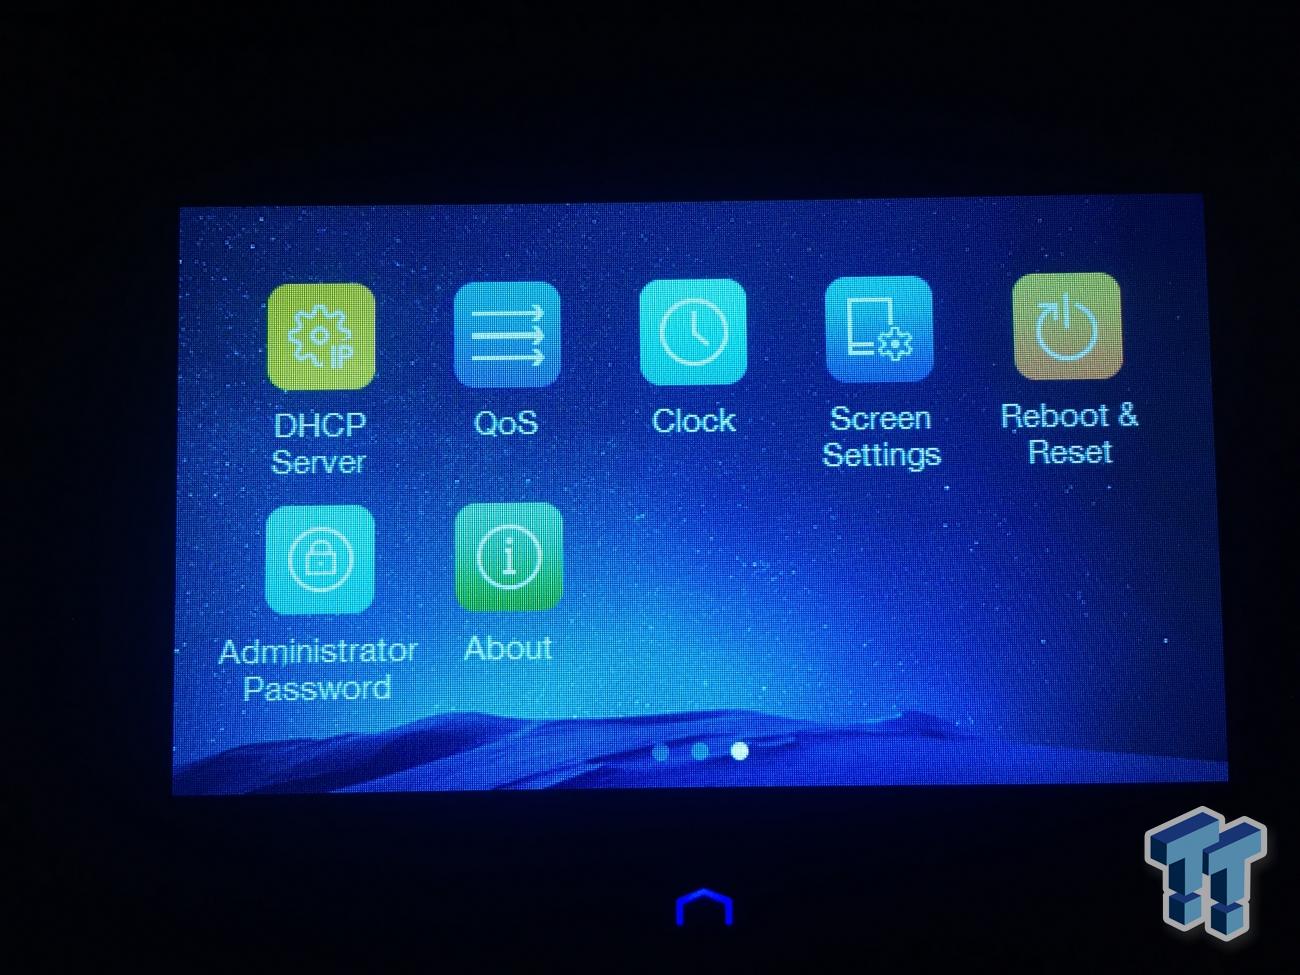 vedvarende ressource brænde Menstruation TP-LINK Touch P5 Touchscreen AC1900 Wireless Router Review